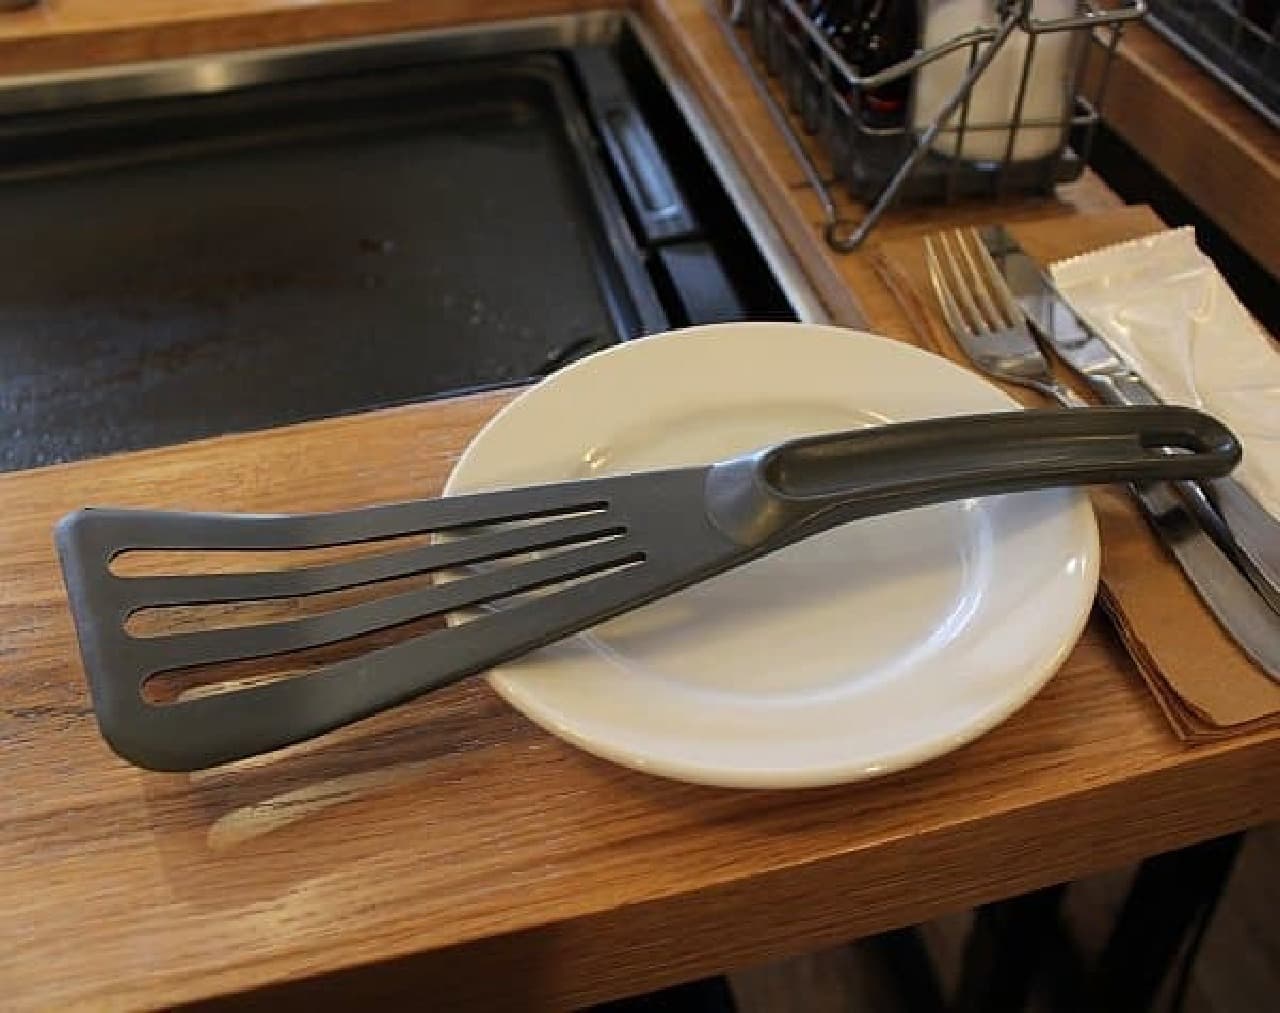 Iron plate and spatula! It's like an okonomiyaki restaurant!